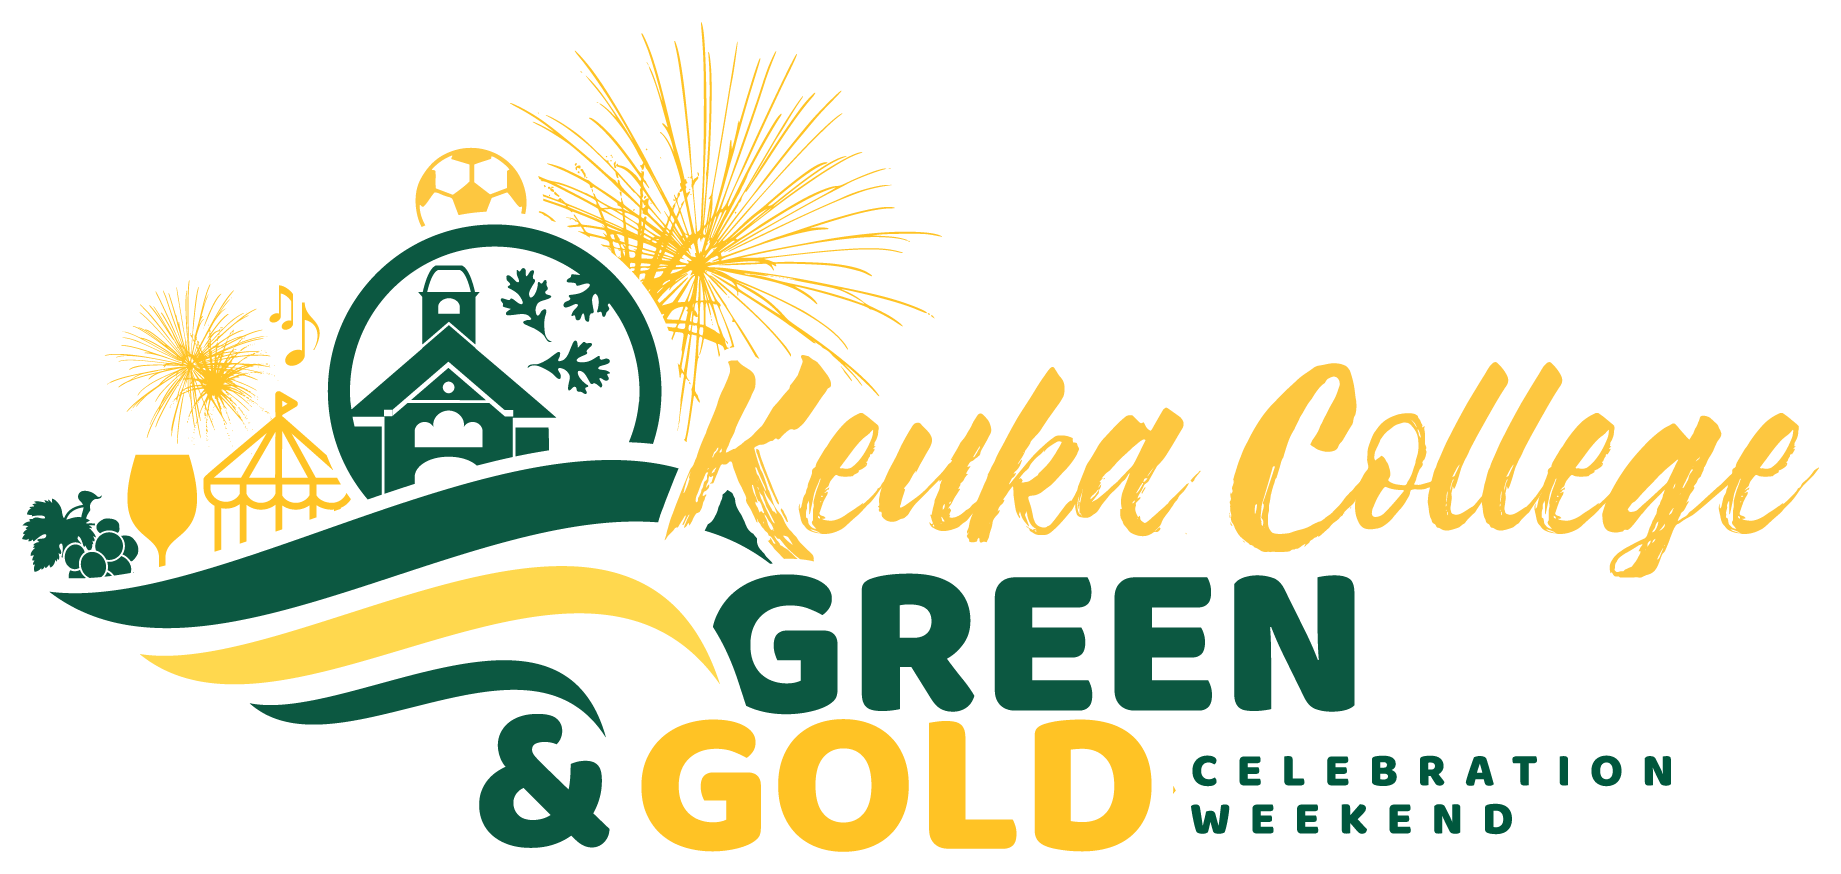 Keuka College Green & Gold Celebration Weekend